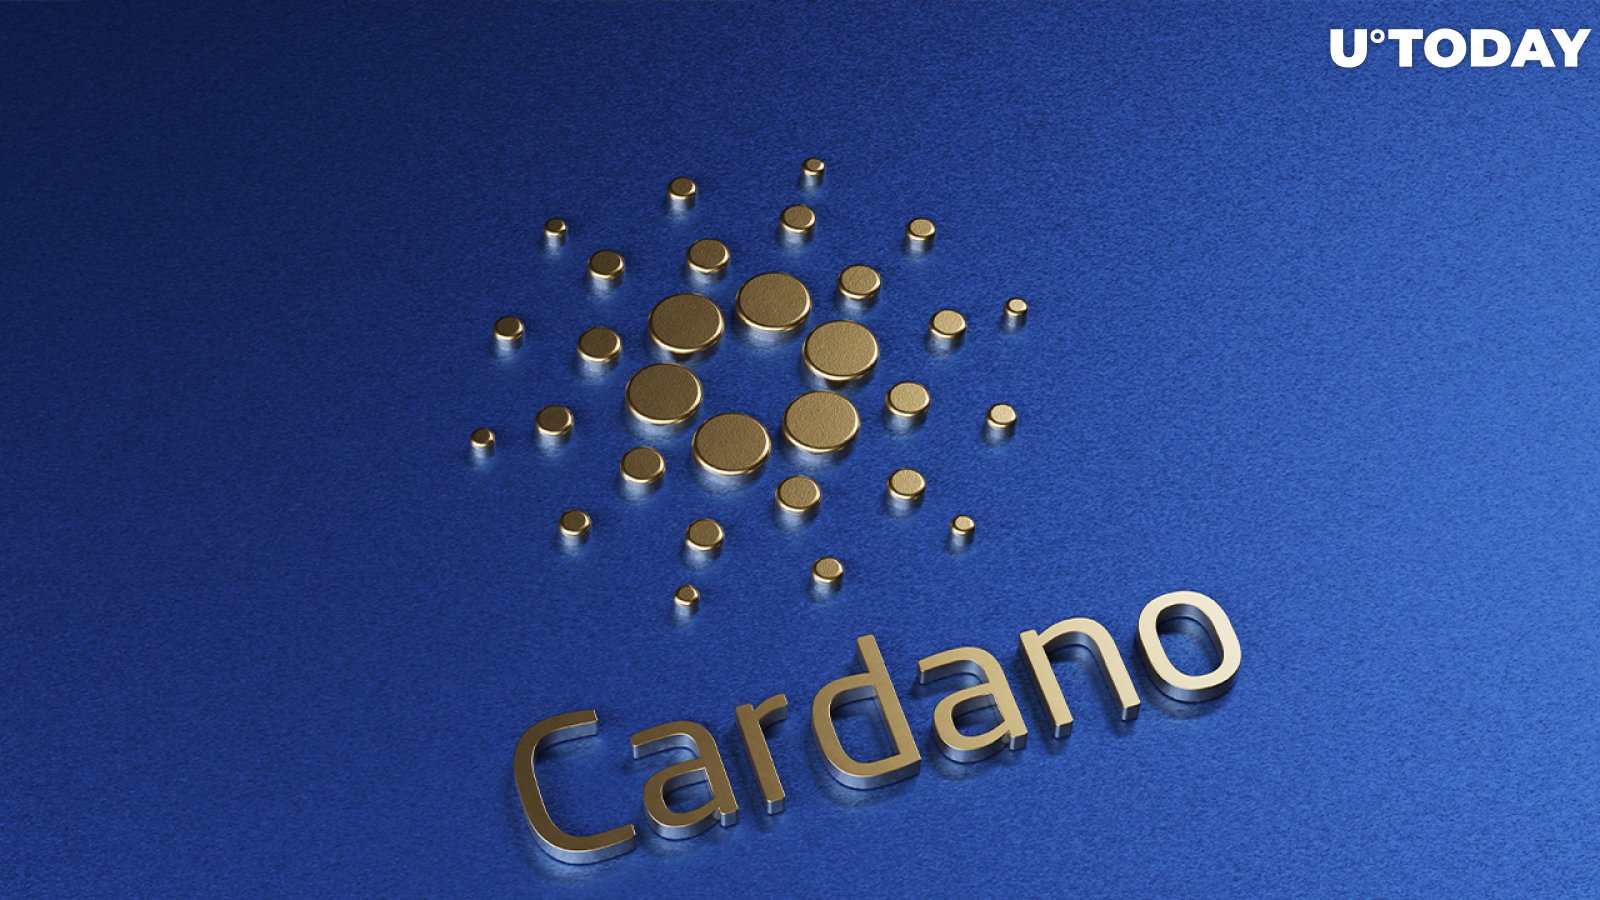 Cardano Ecosystem Teased by Bitrue for Huge Surprise Post SUNDAE Listing: Details